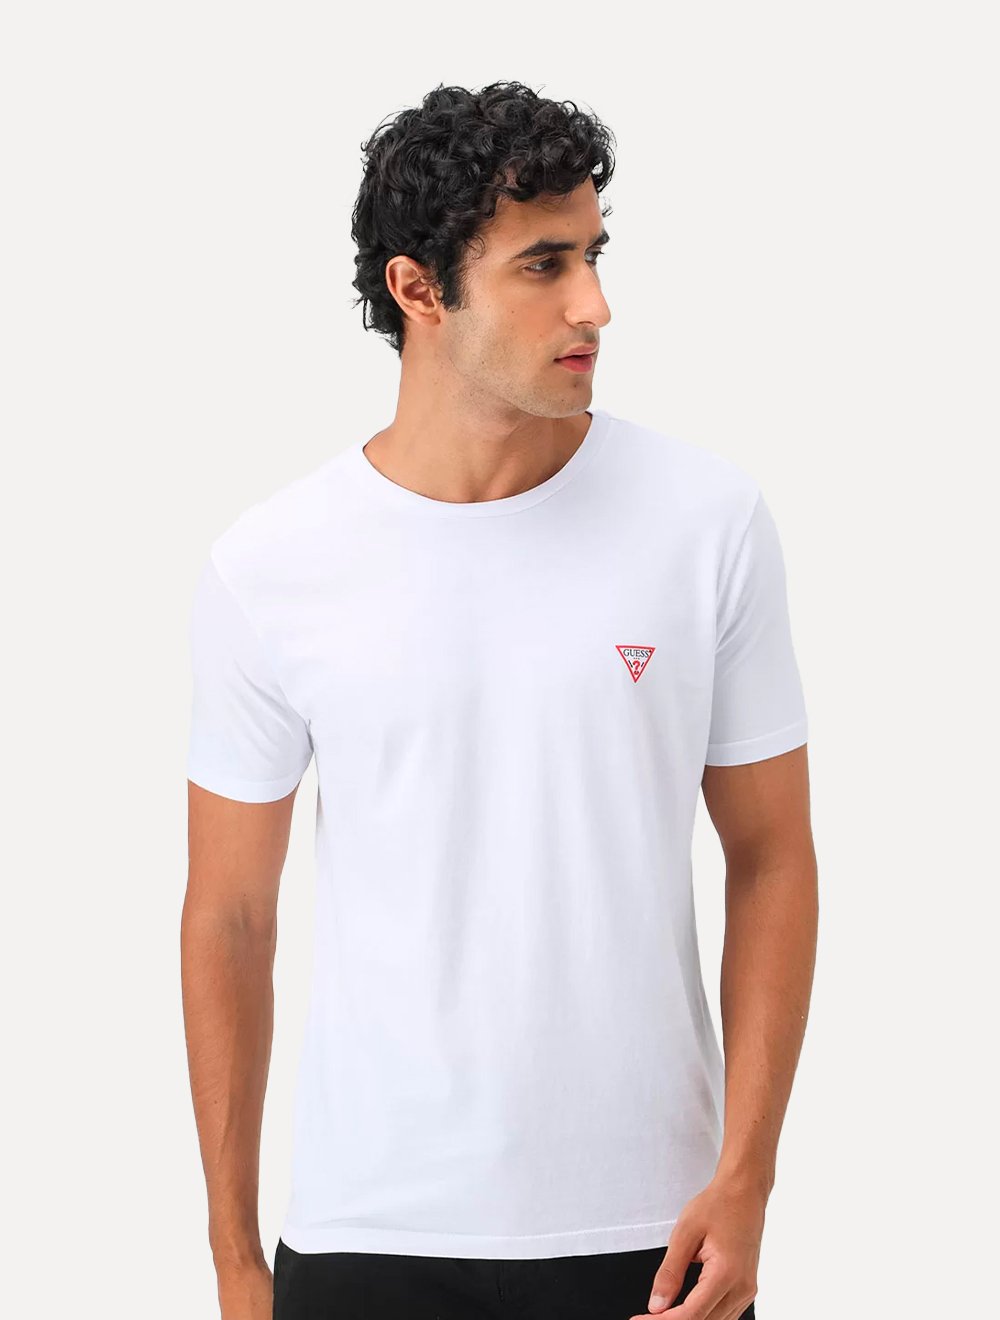 Camiseta Guess Masculina Original Small Triangle Branca